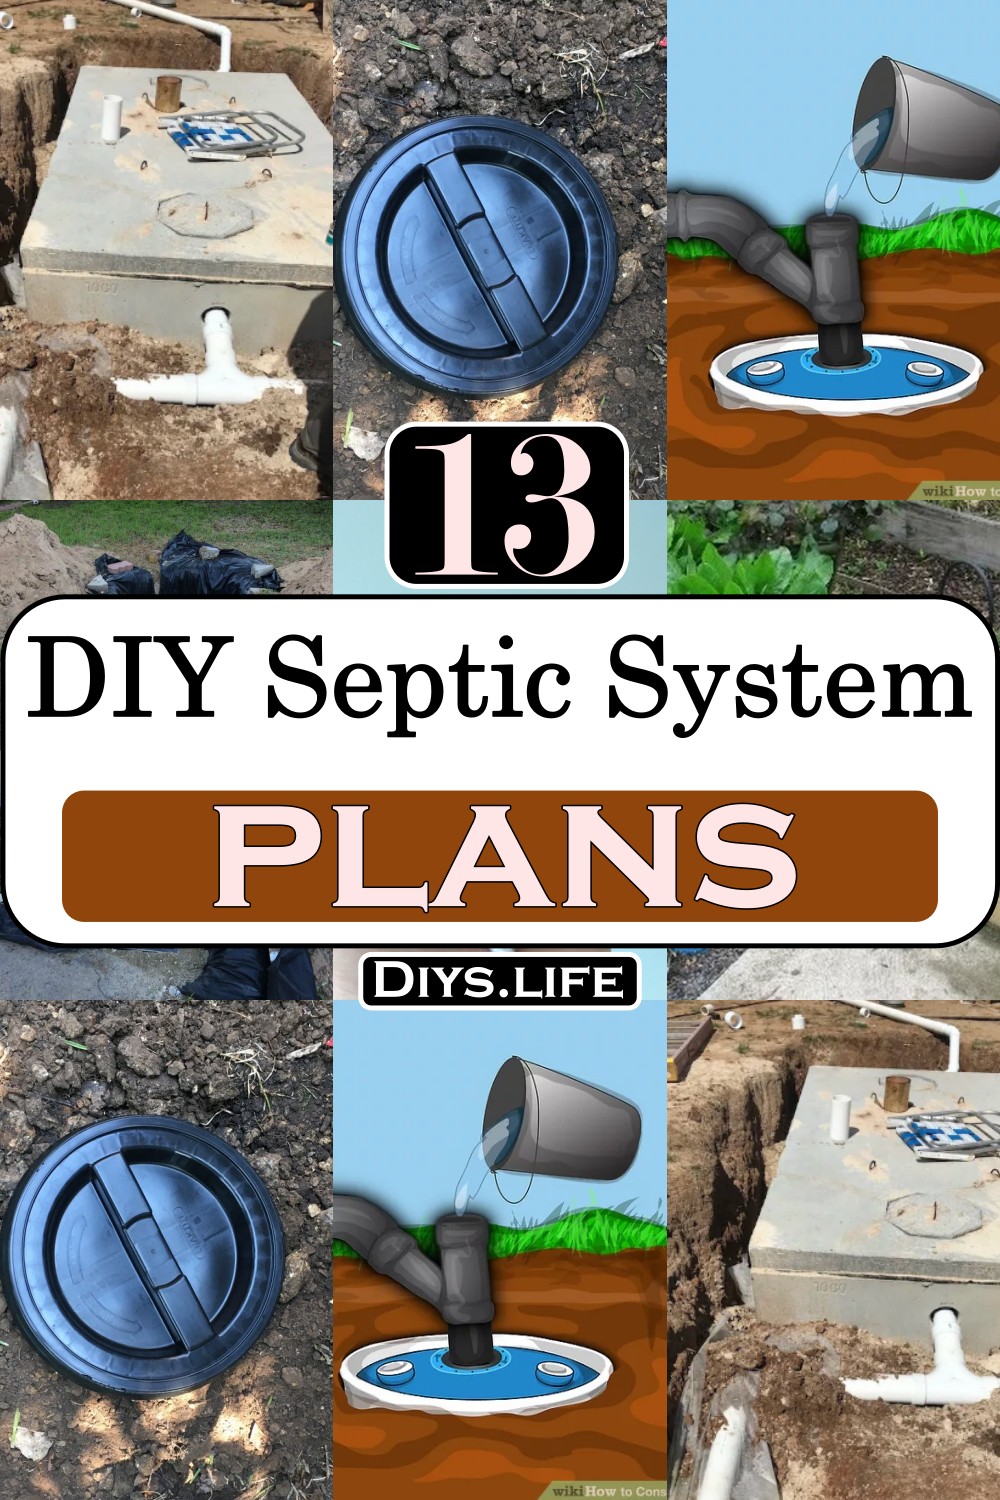 DIY Septic System plans